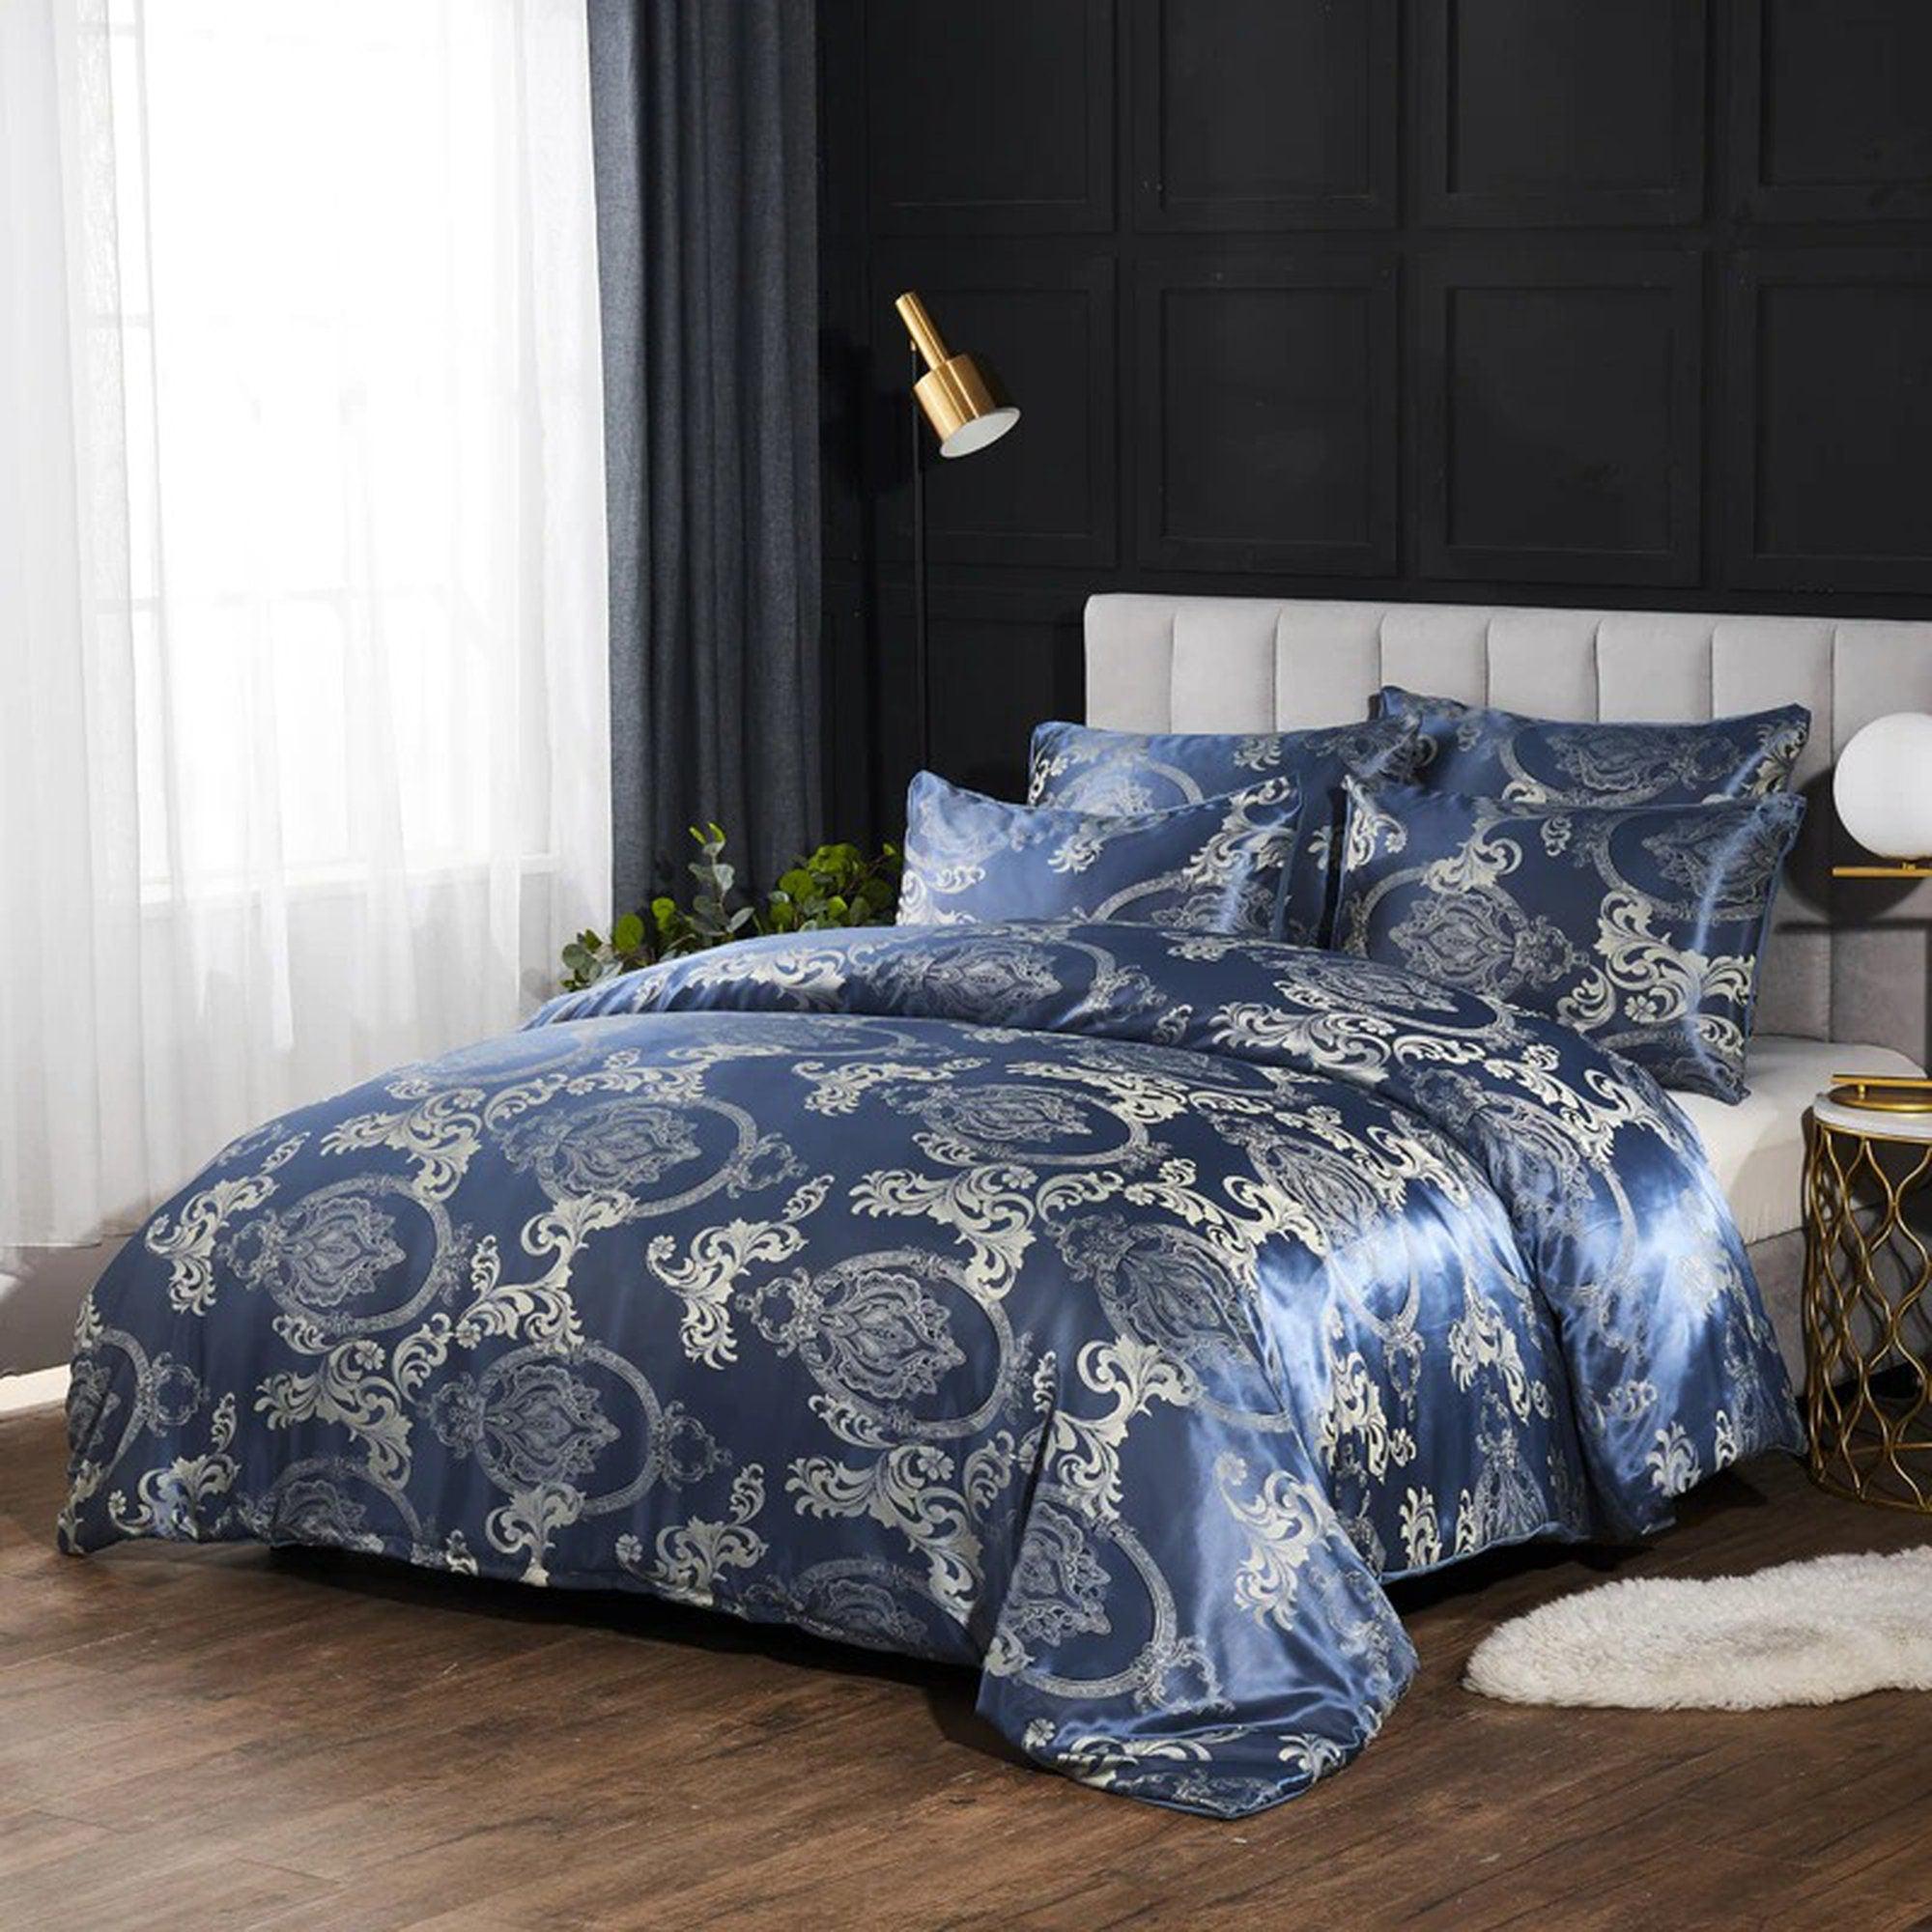 daintyduvet Luxury Blue Victorian Bedding made with Silky Jacquard Fabric, Damask Duvet Cover Set, Designer Bedding, Aesthetic Duvet Cover King Queen